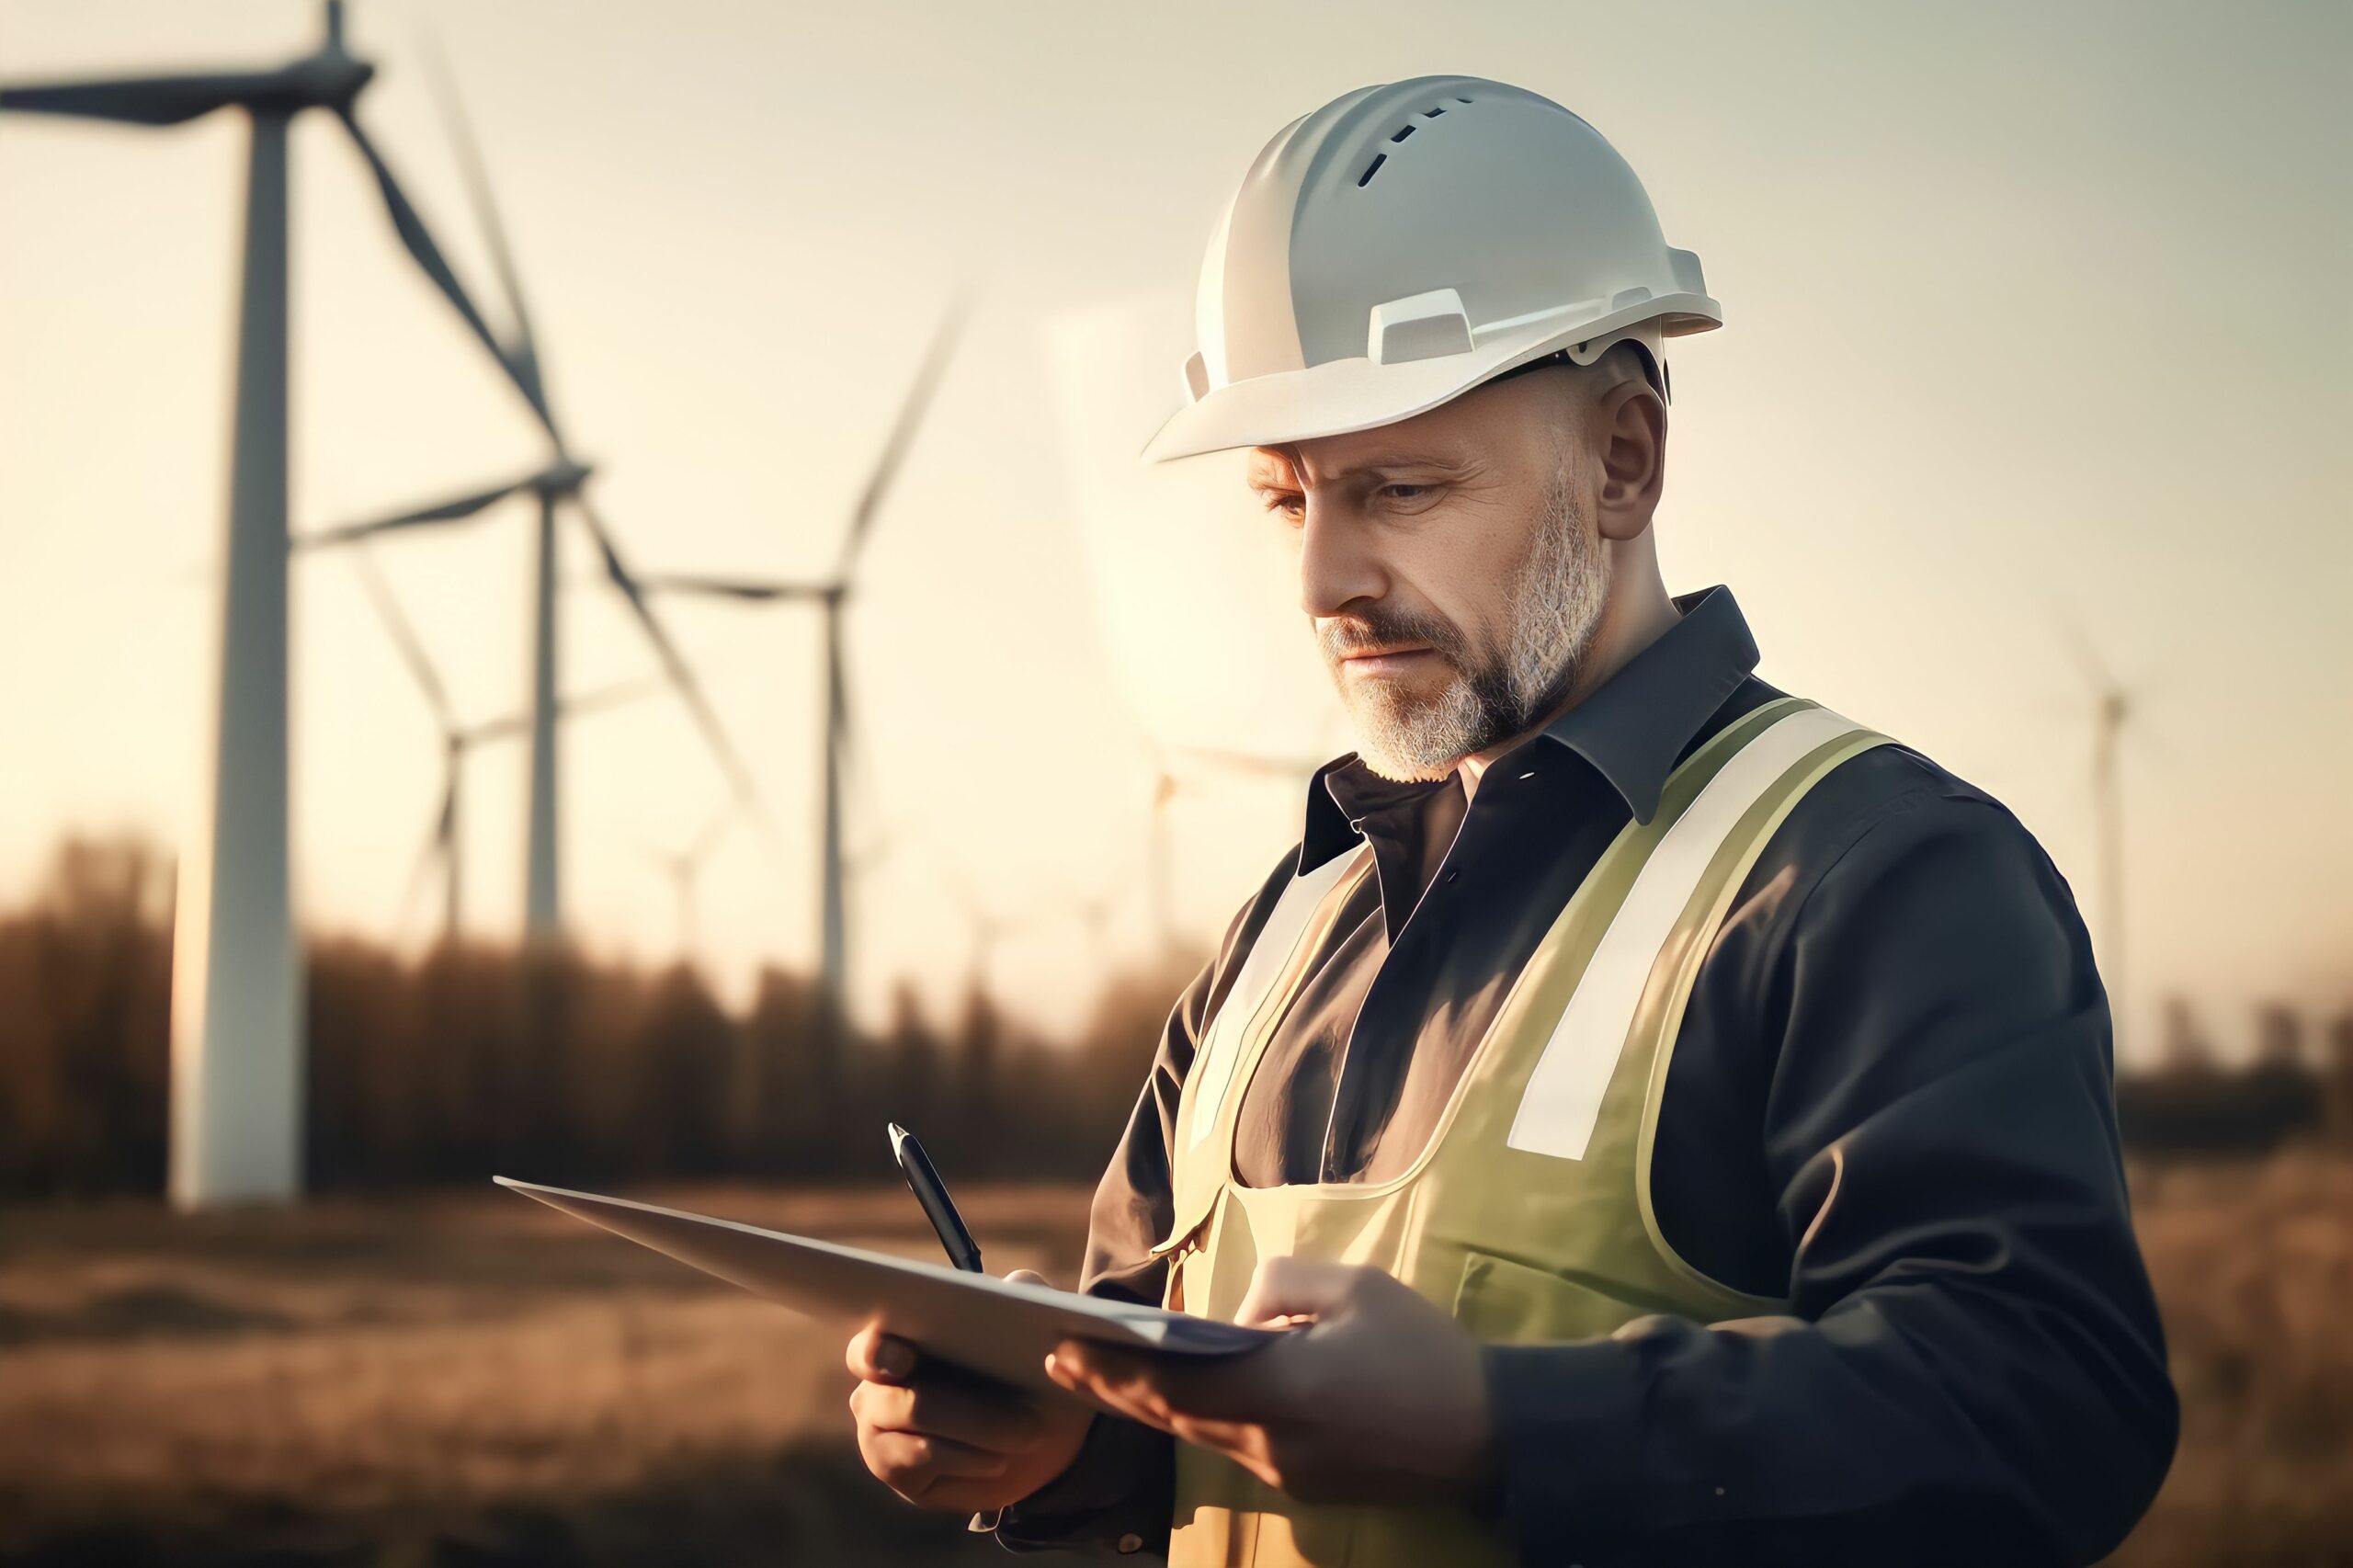 Wind turbine service engineer maintenance and plan for inspectio